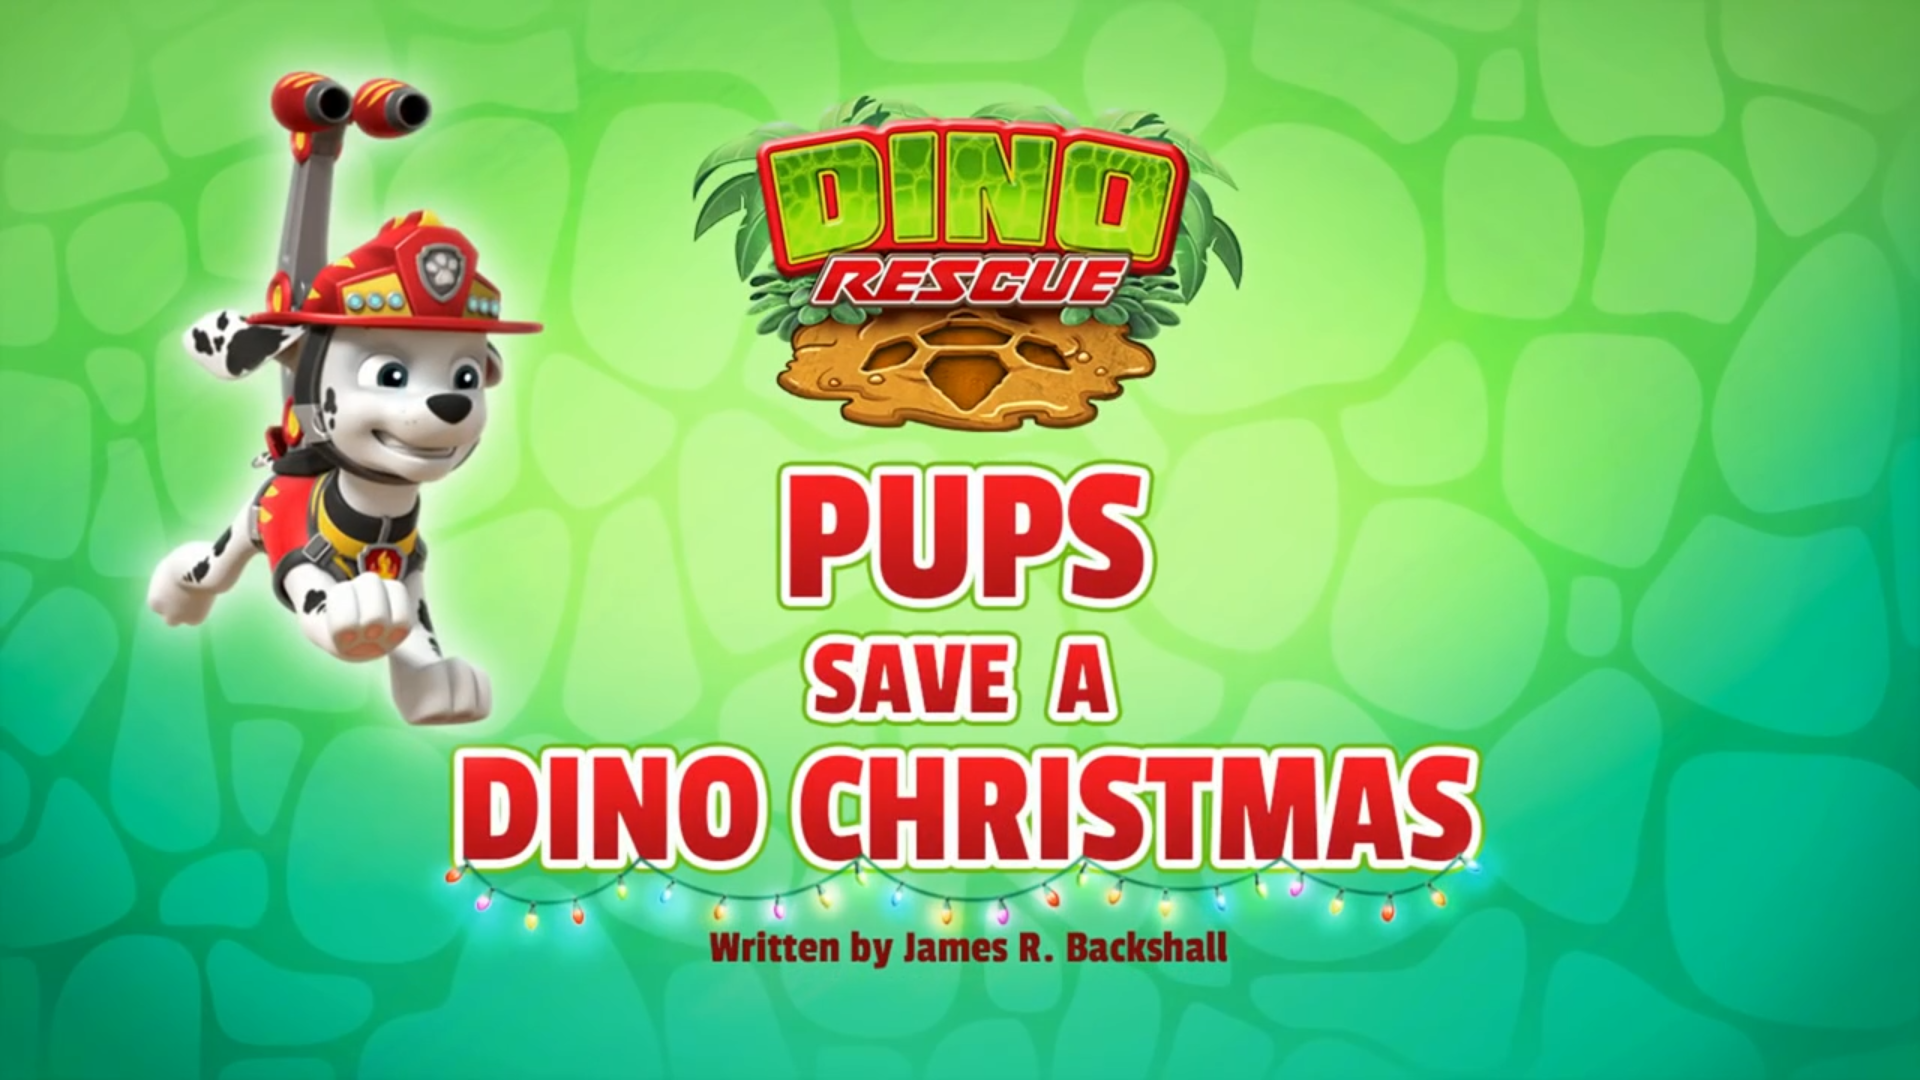 Download Paw Patrol Original 5s Dino Rescue Pups Save A Dino Christmas Paw Patrol Wiki Fandom